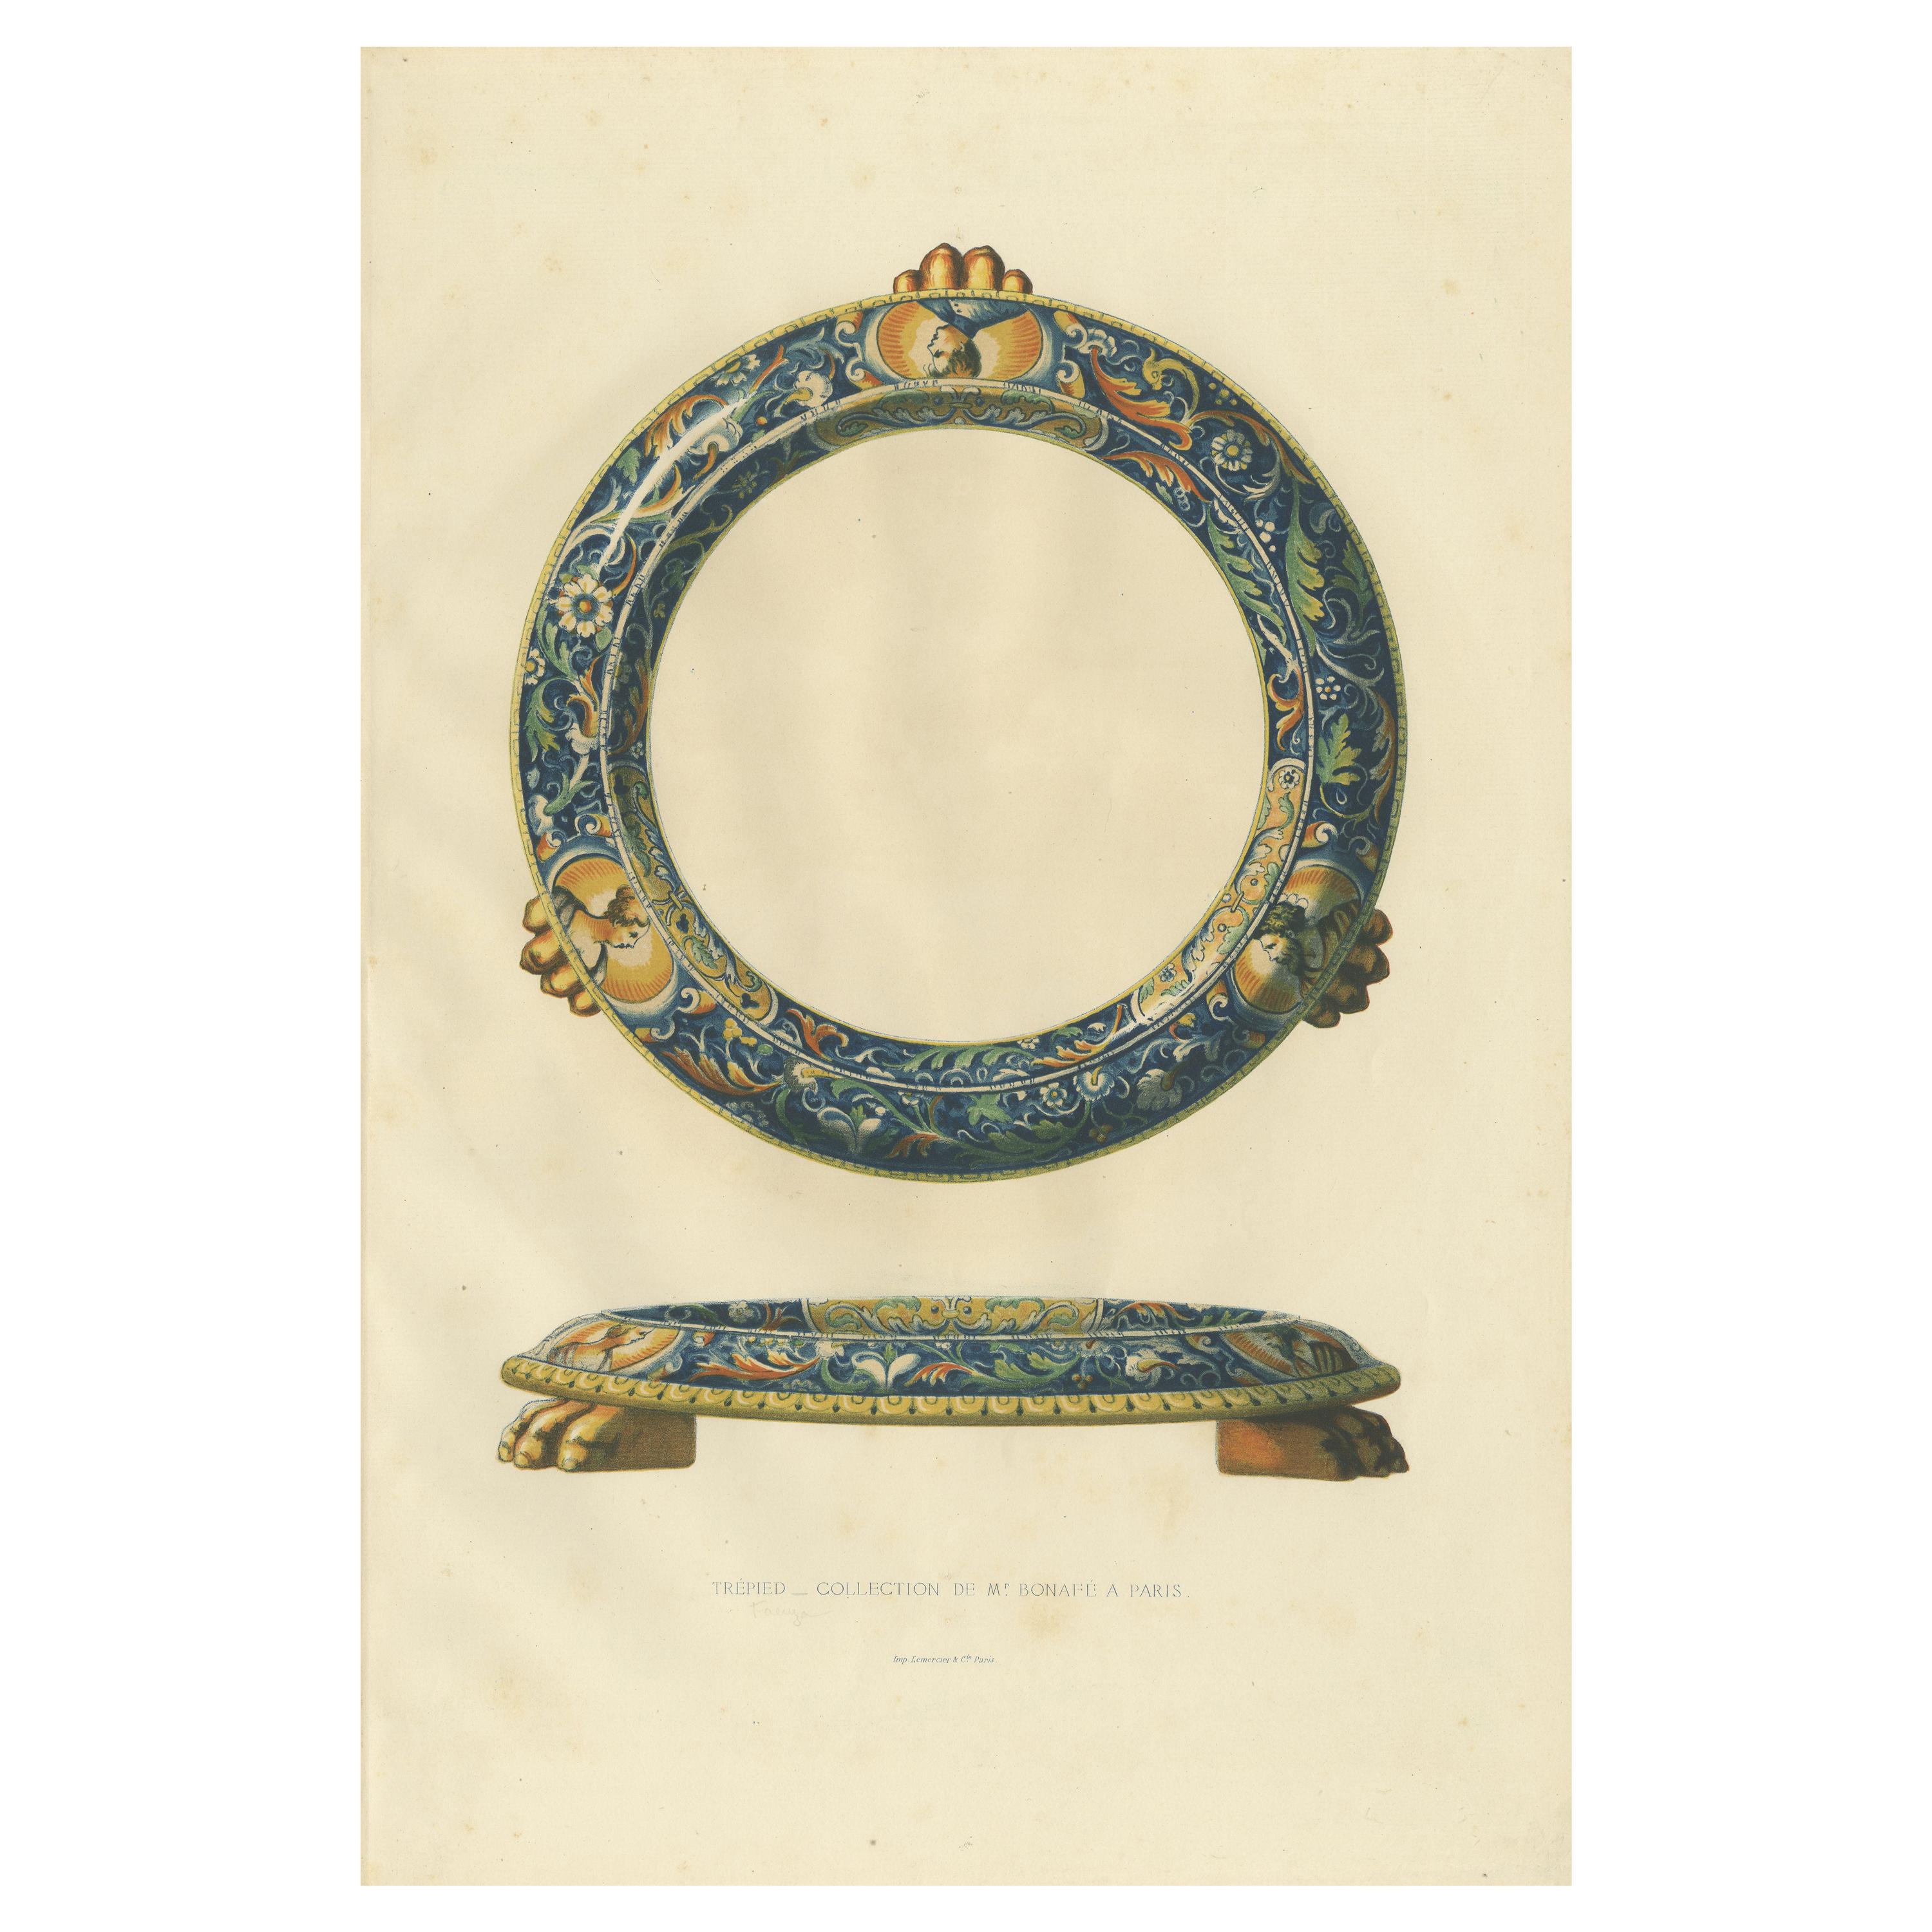 Antique Print of a Ceramic Tripod by Delange, '1869'